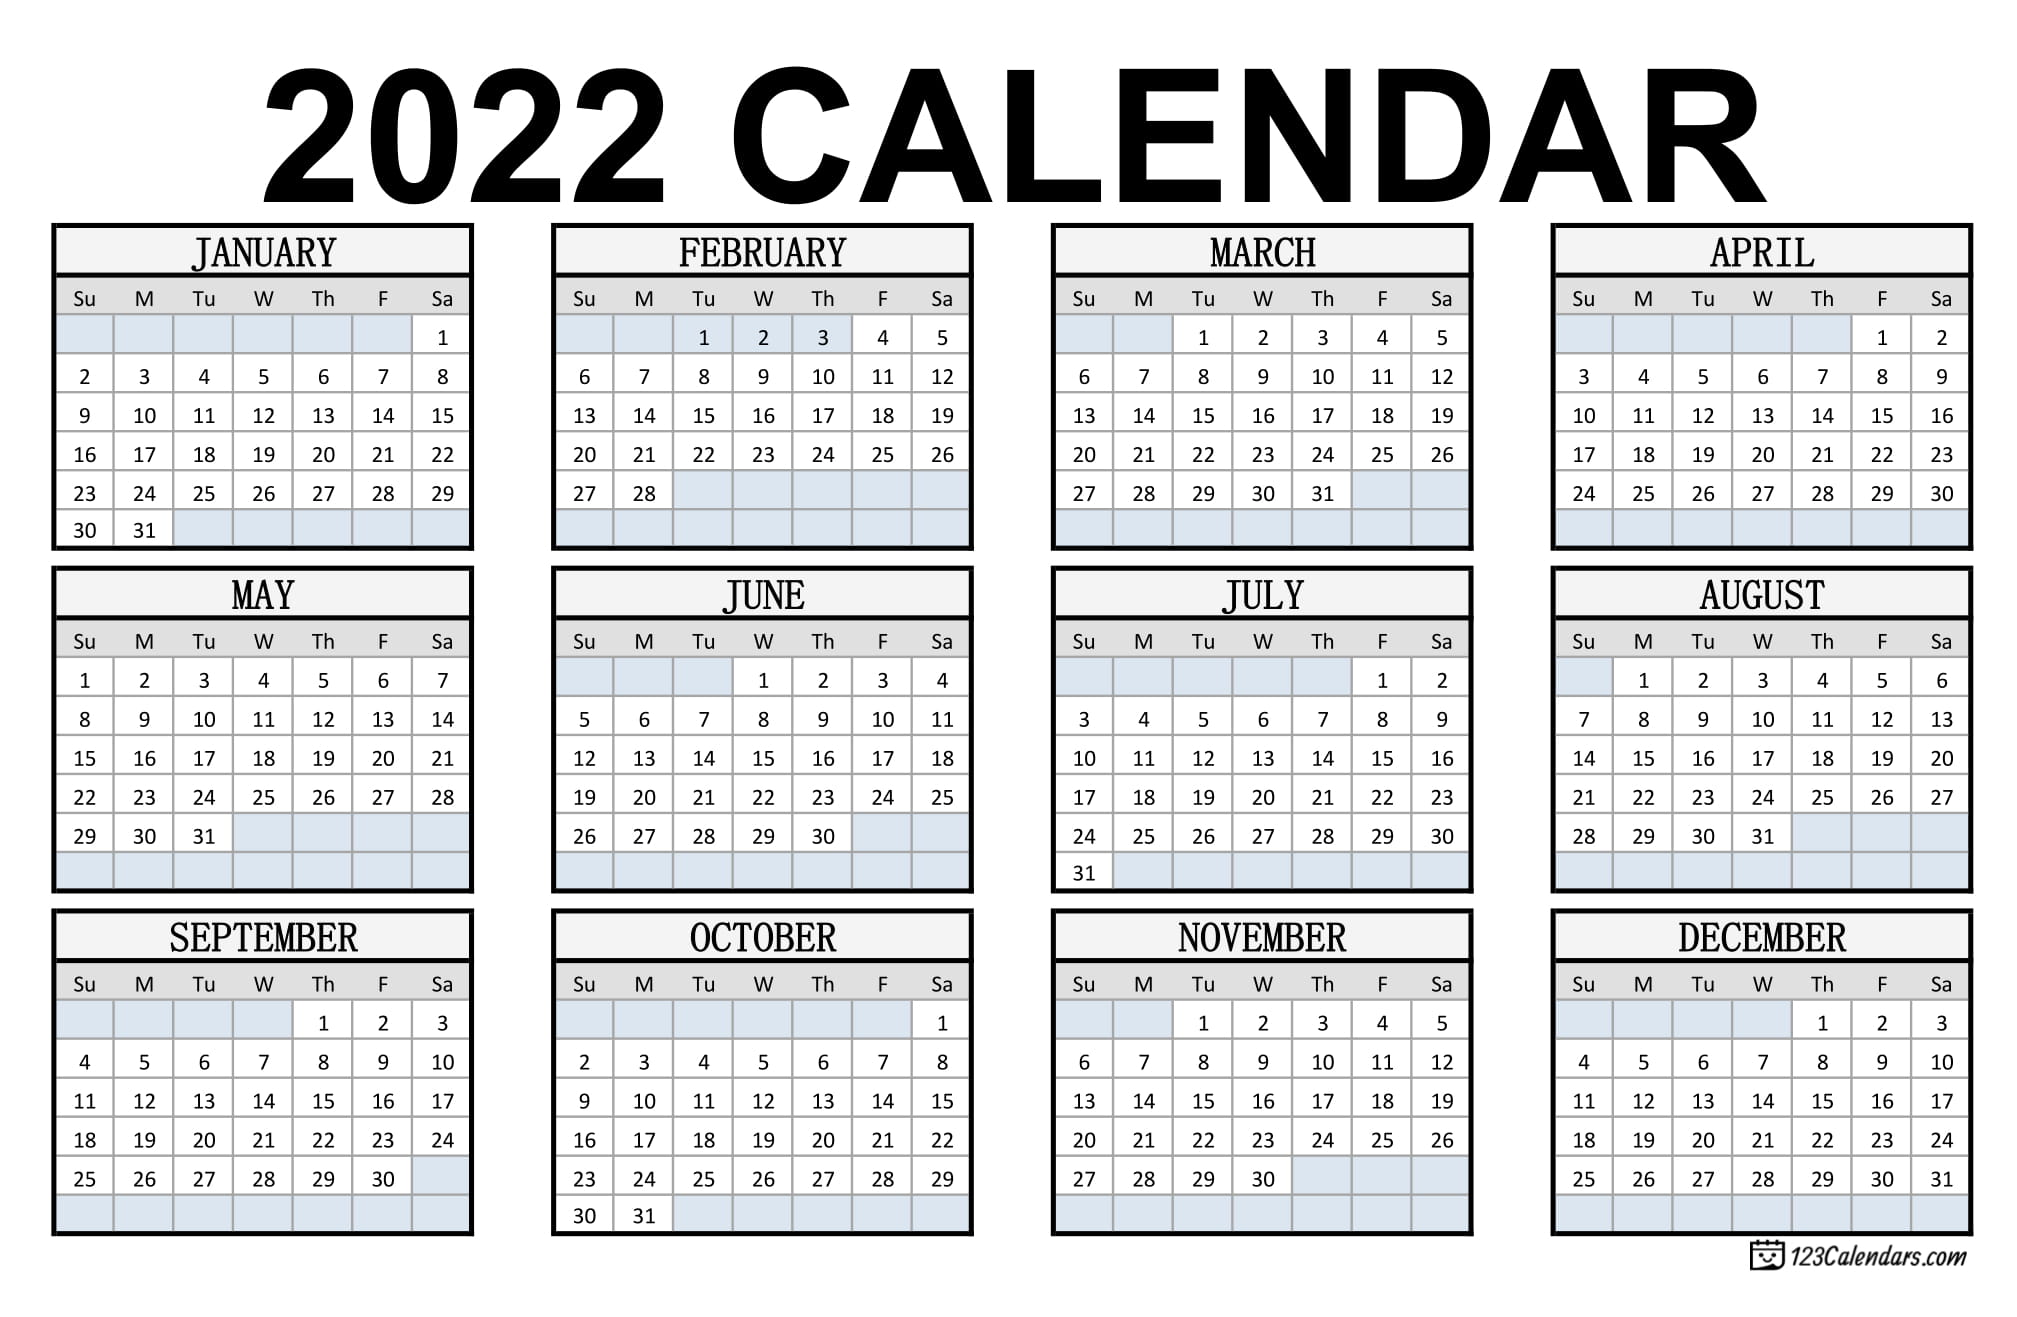 Print Out Calendar 2022 Year 2022 Calendar Templates | 123Calendars.com